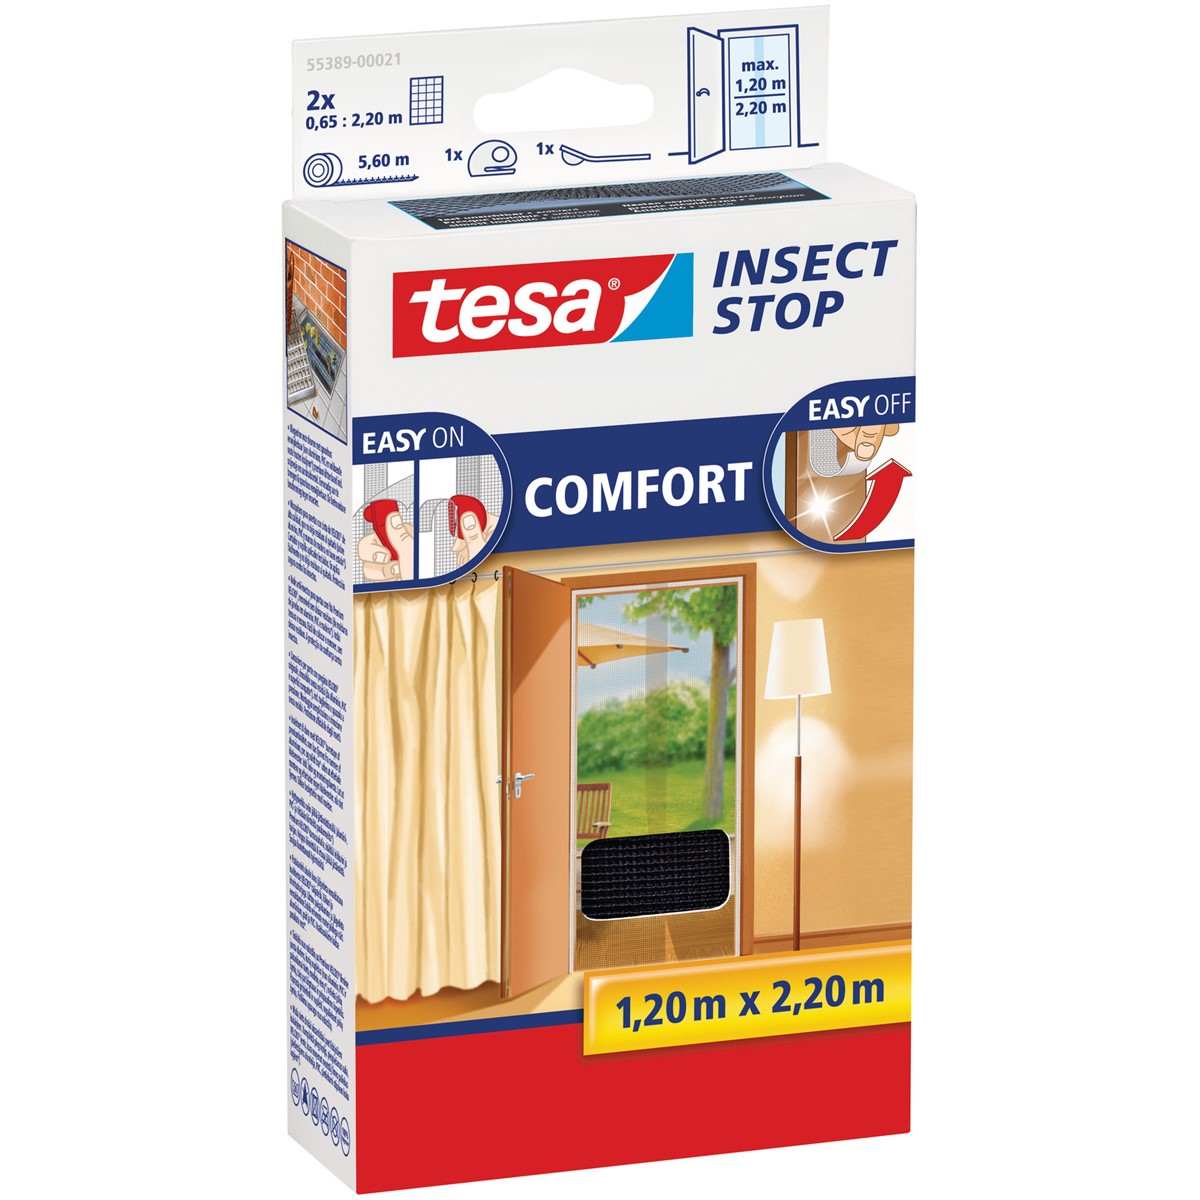 tesa 55667-00020 - Fliegengitter Insect Stop Klett COMFORT für